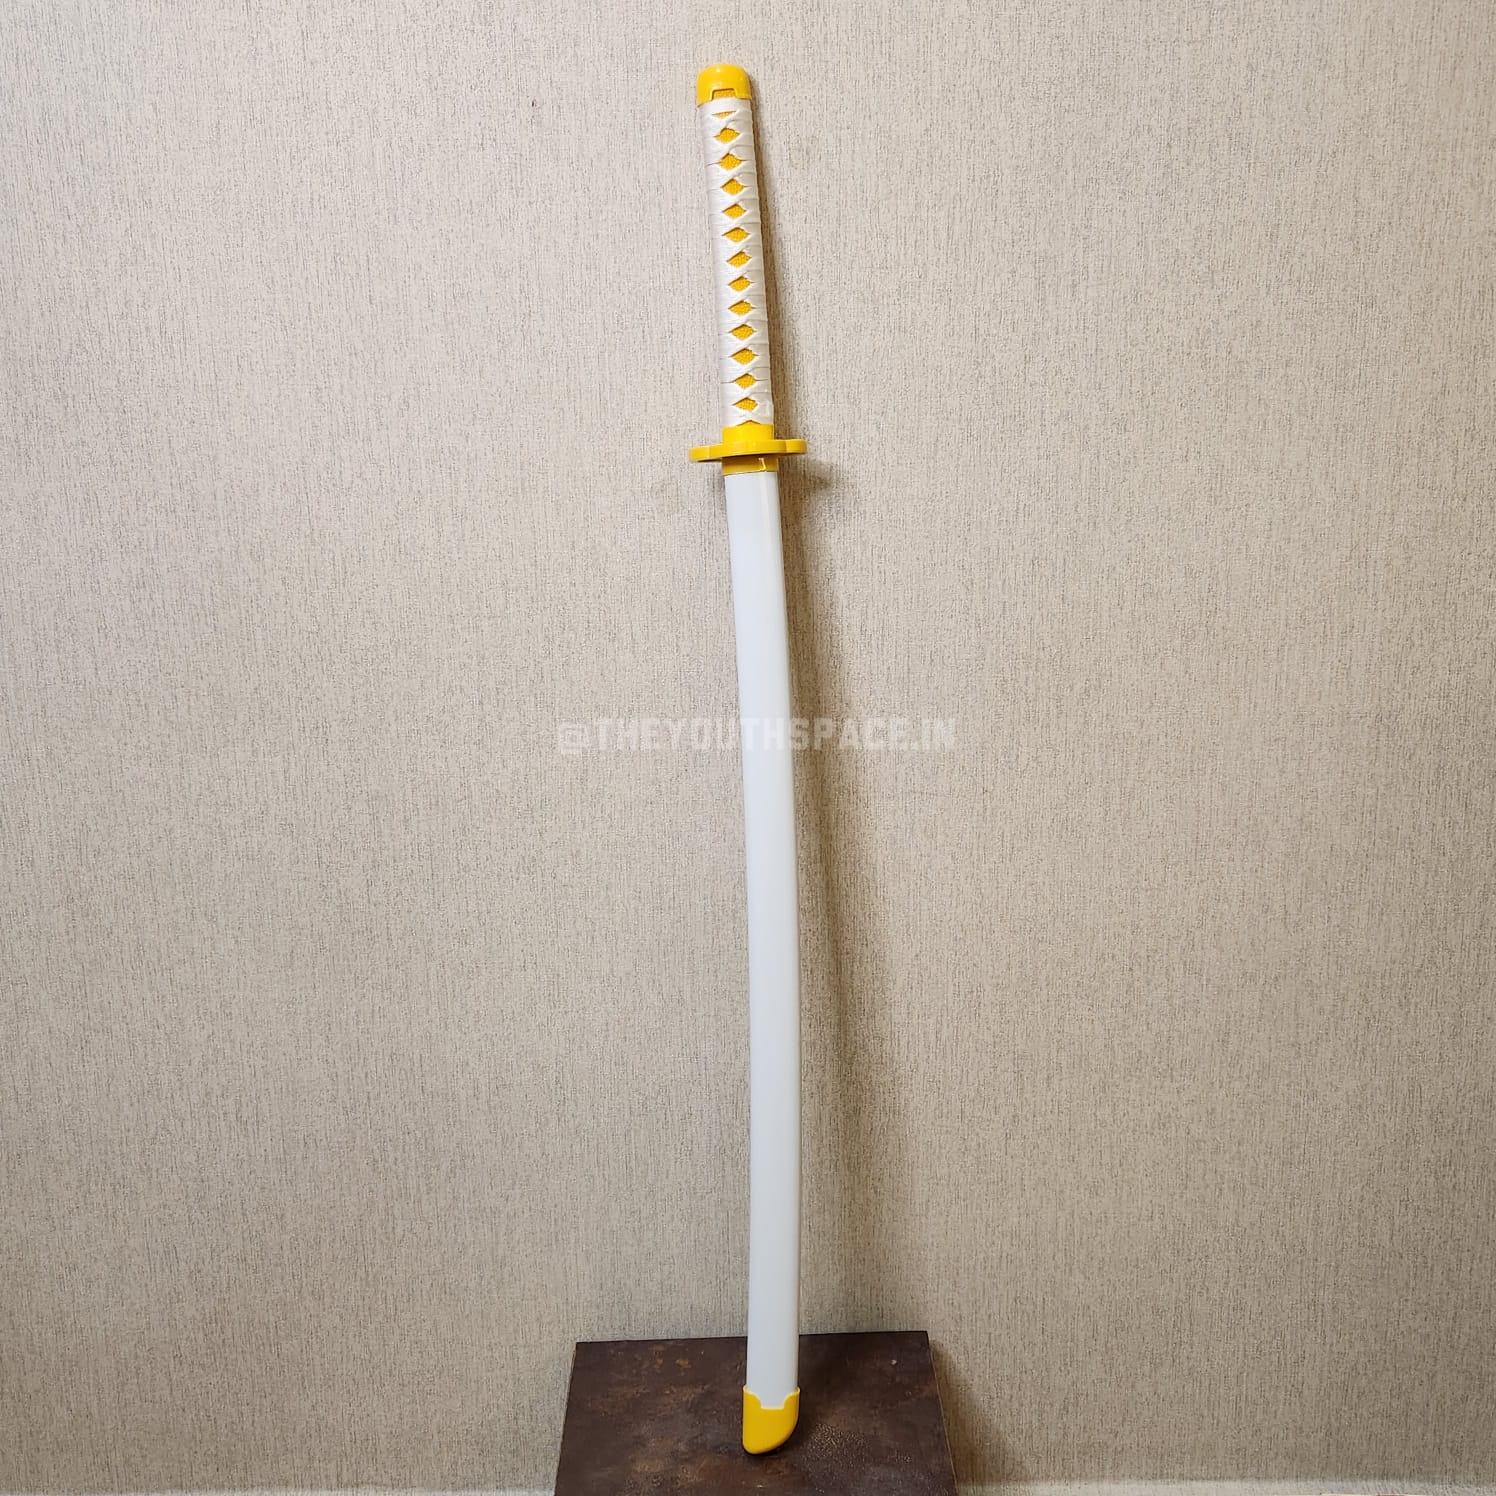 Zenitsu's practice wooden Katana (104 cms)